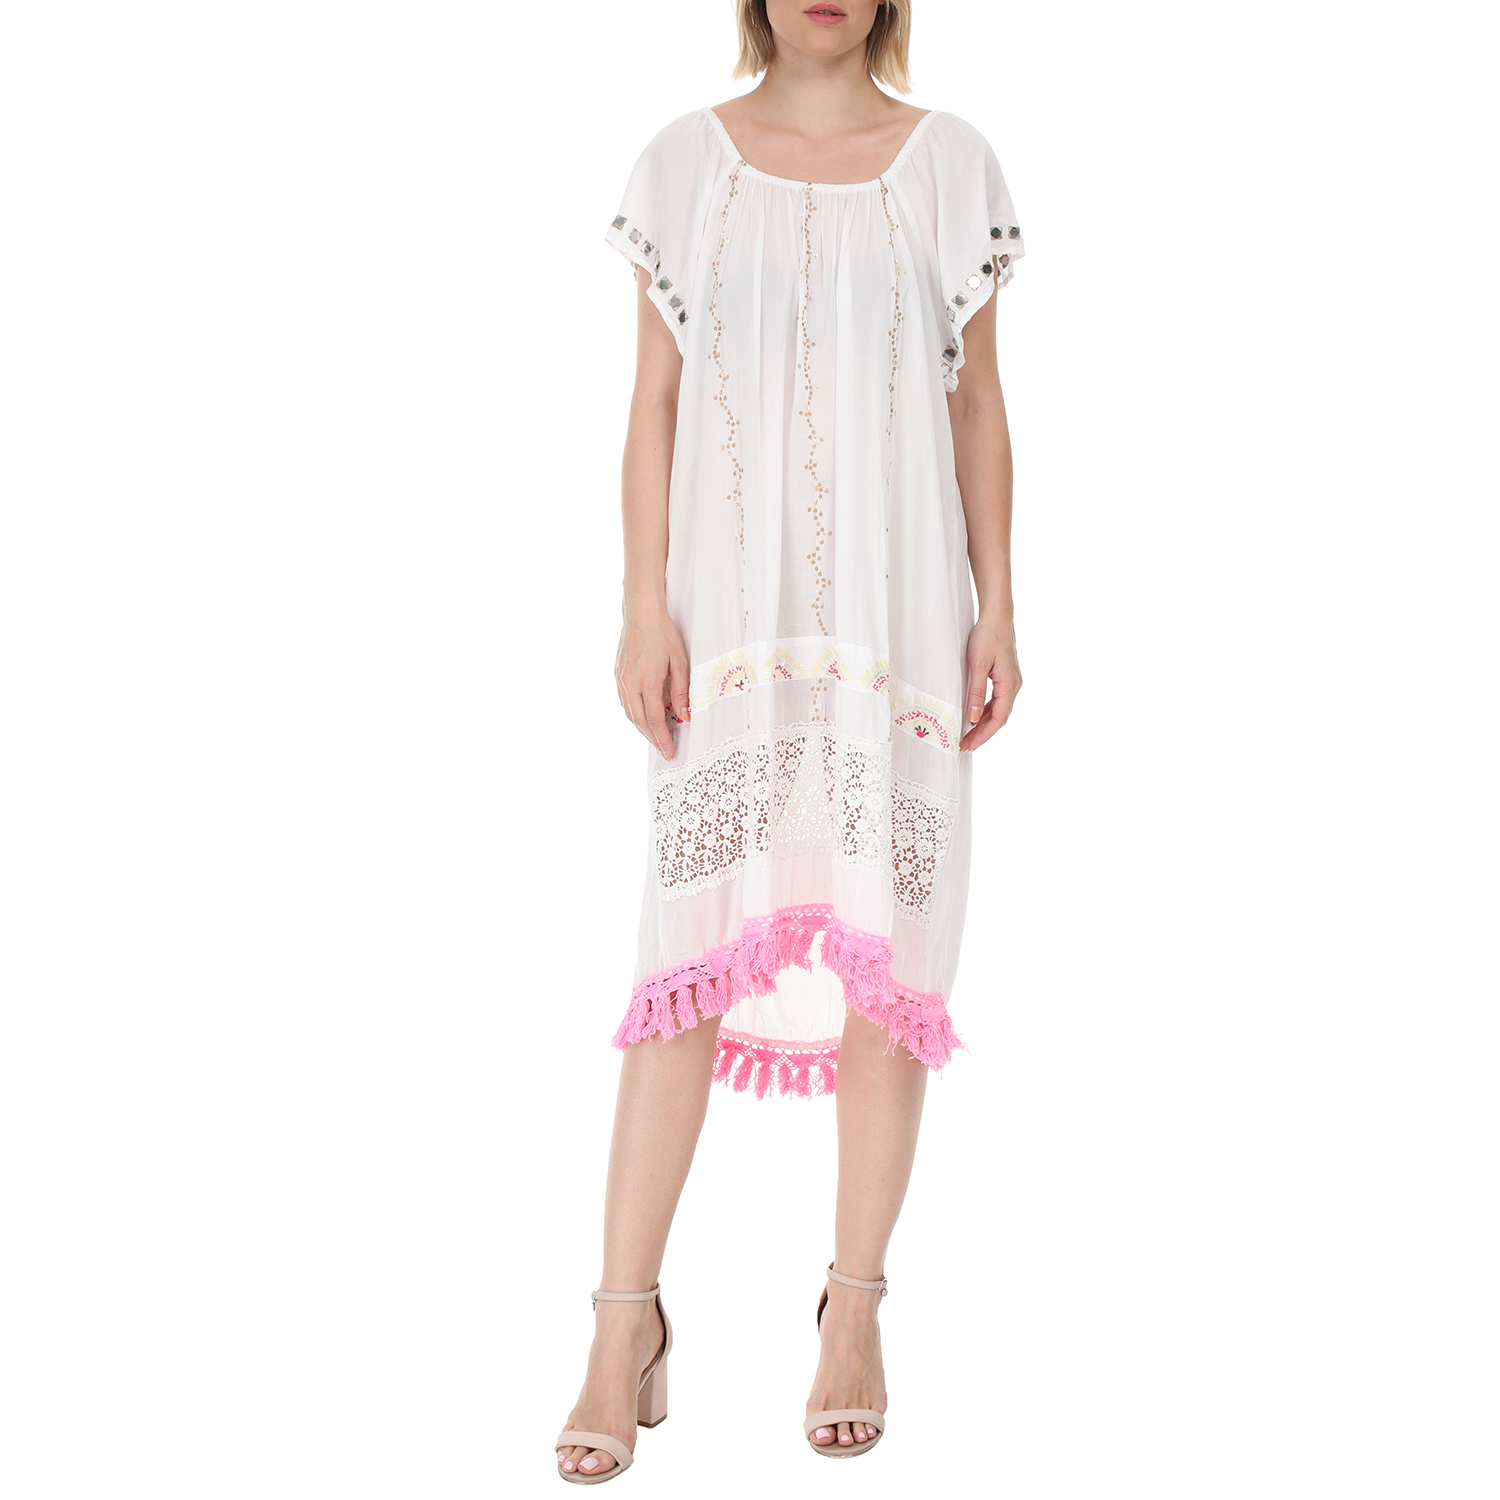 RUBY YAYA - Γυναικείο μίνι φόρεμα RUBY YAYA VALENTINA λευκό Γυναικεία/Ρούχα/Φορέματα/Μέχρι το γόνατο